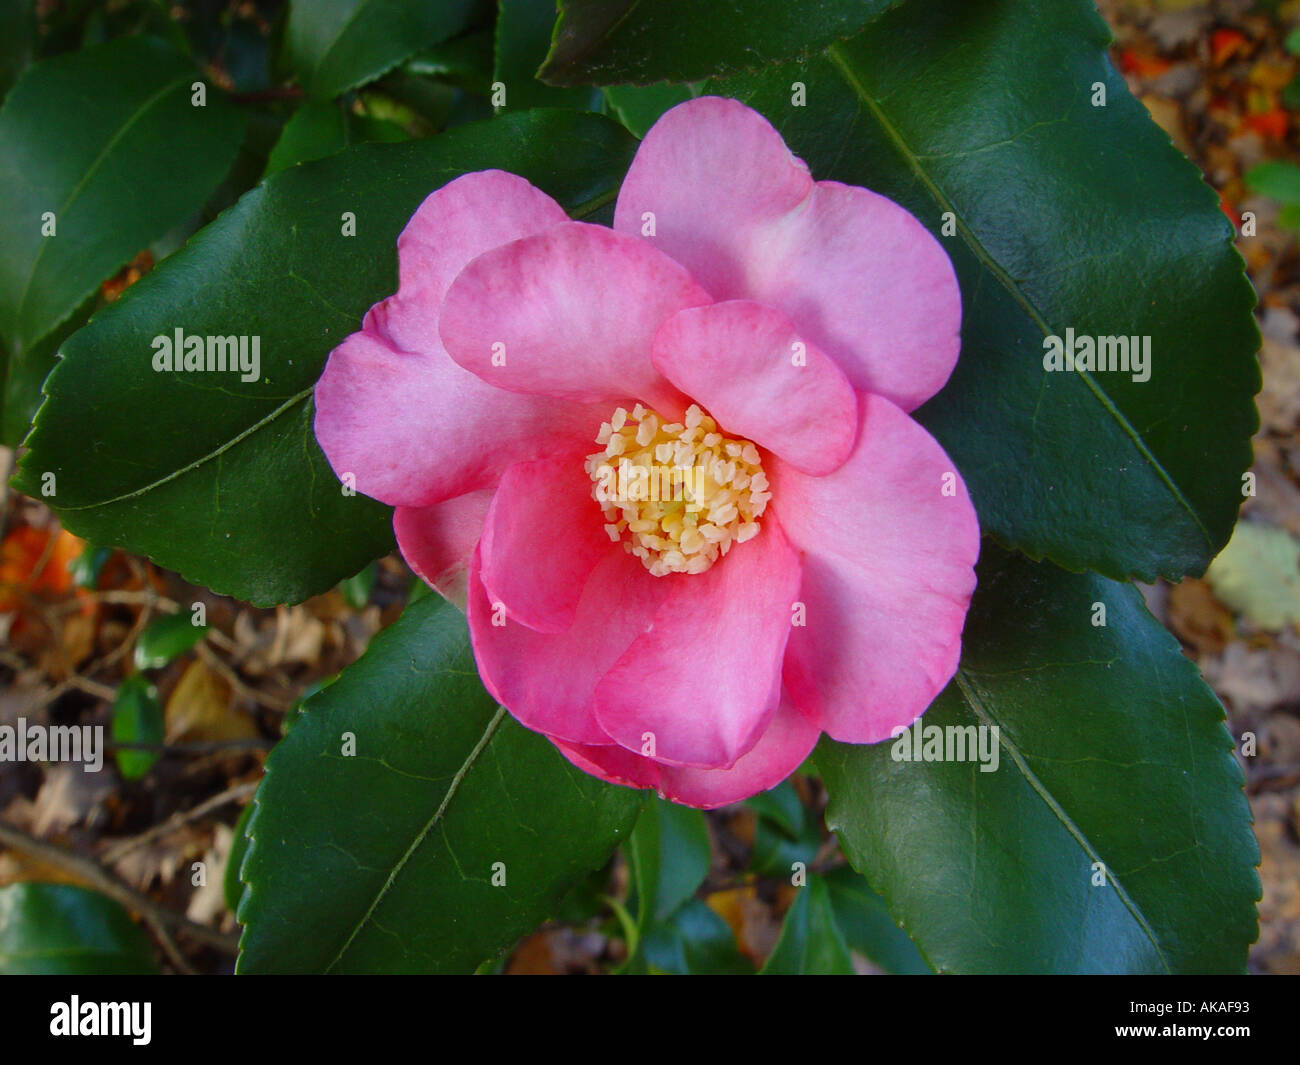 Camellia sasanqua Cleopatra Stock Photo - Alamy